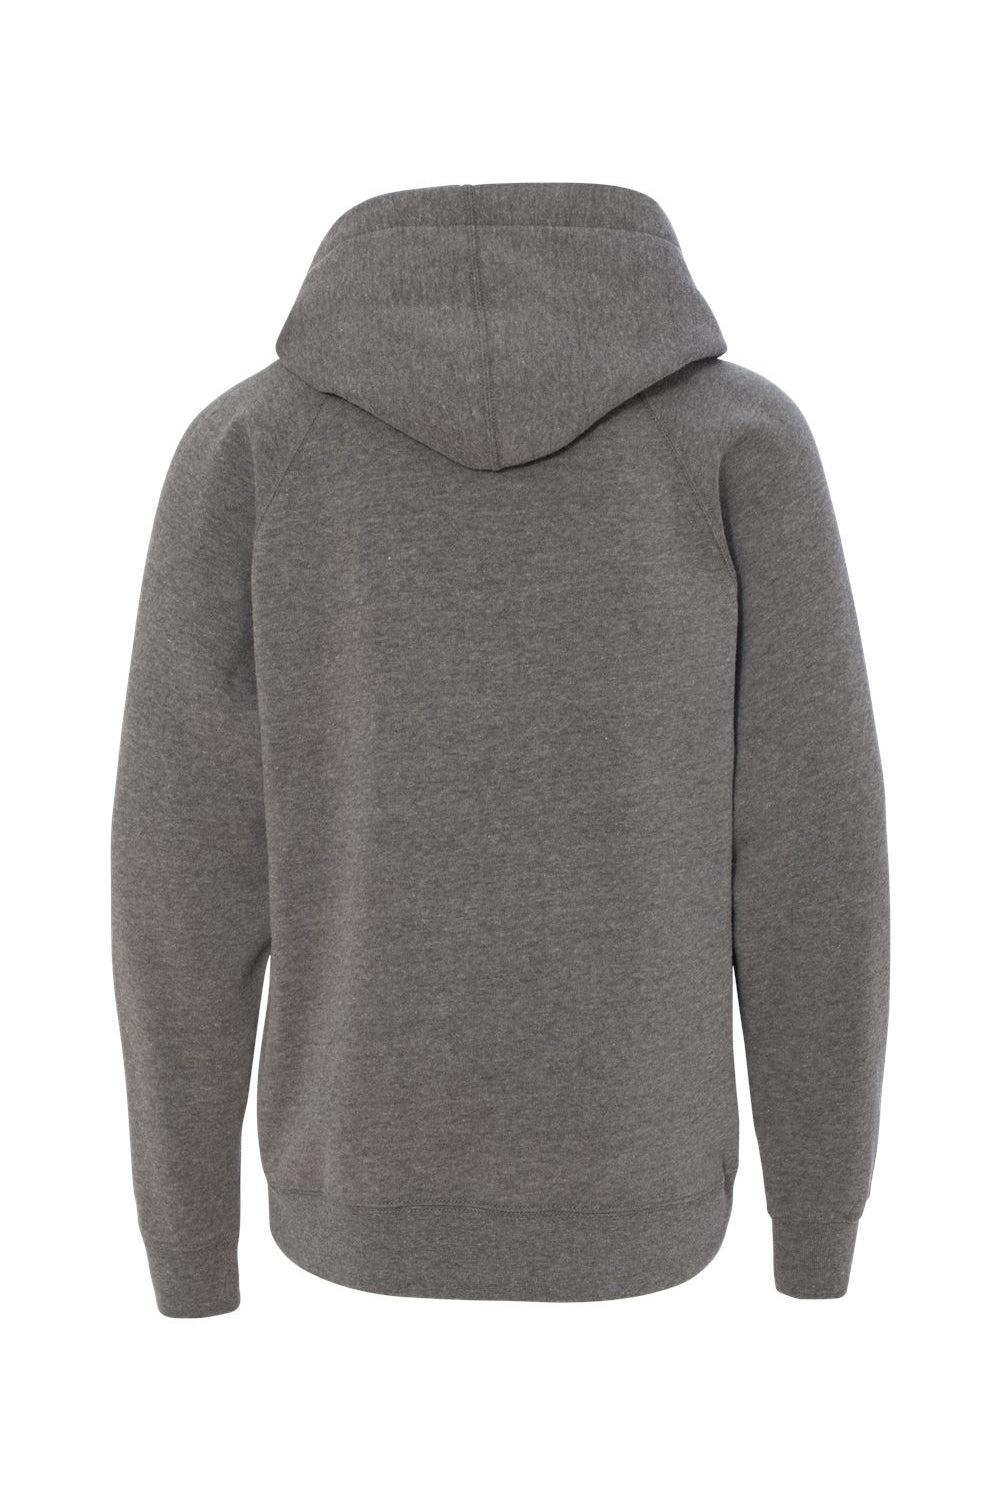 Independent Trading Co. PRM15YSB Youth Special Blend Raglan Hooded Sweatshirt Hoodie Nickel Grey Flat Back